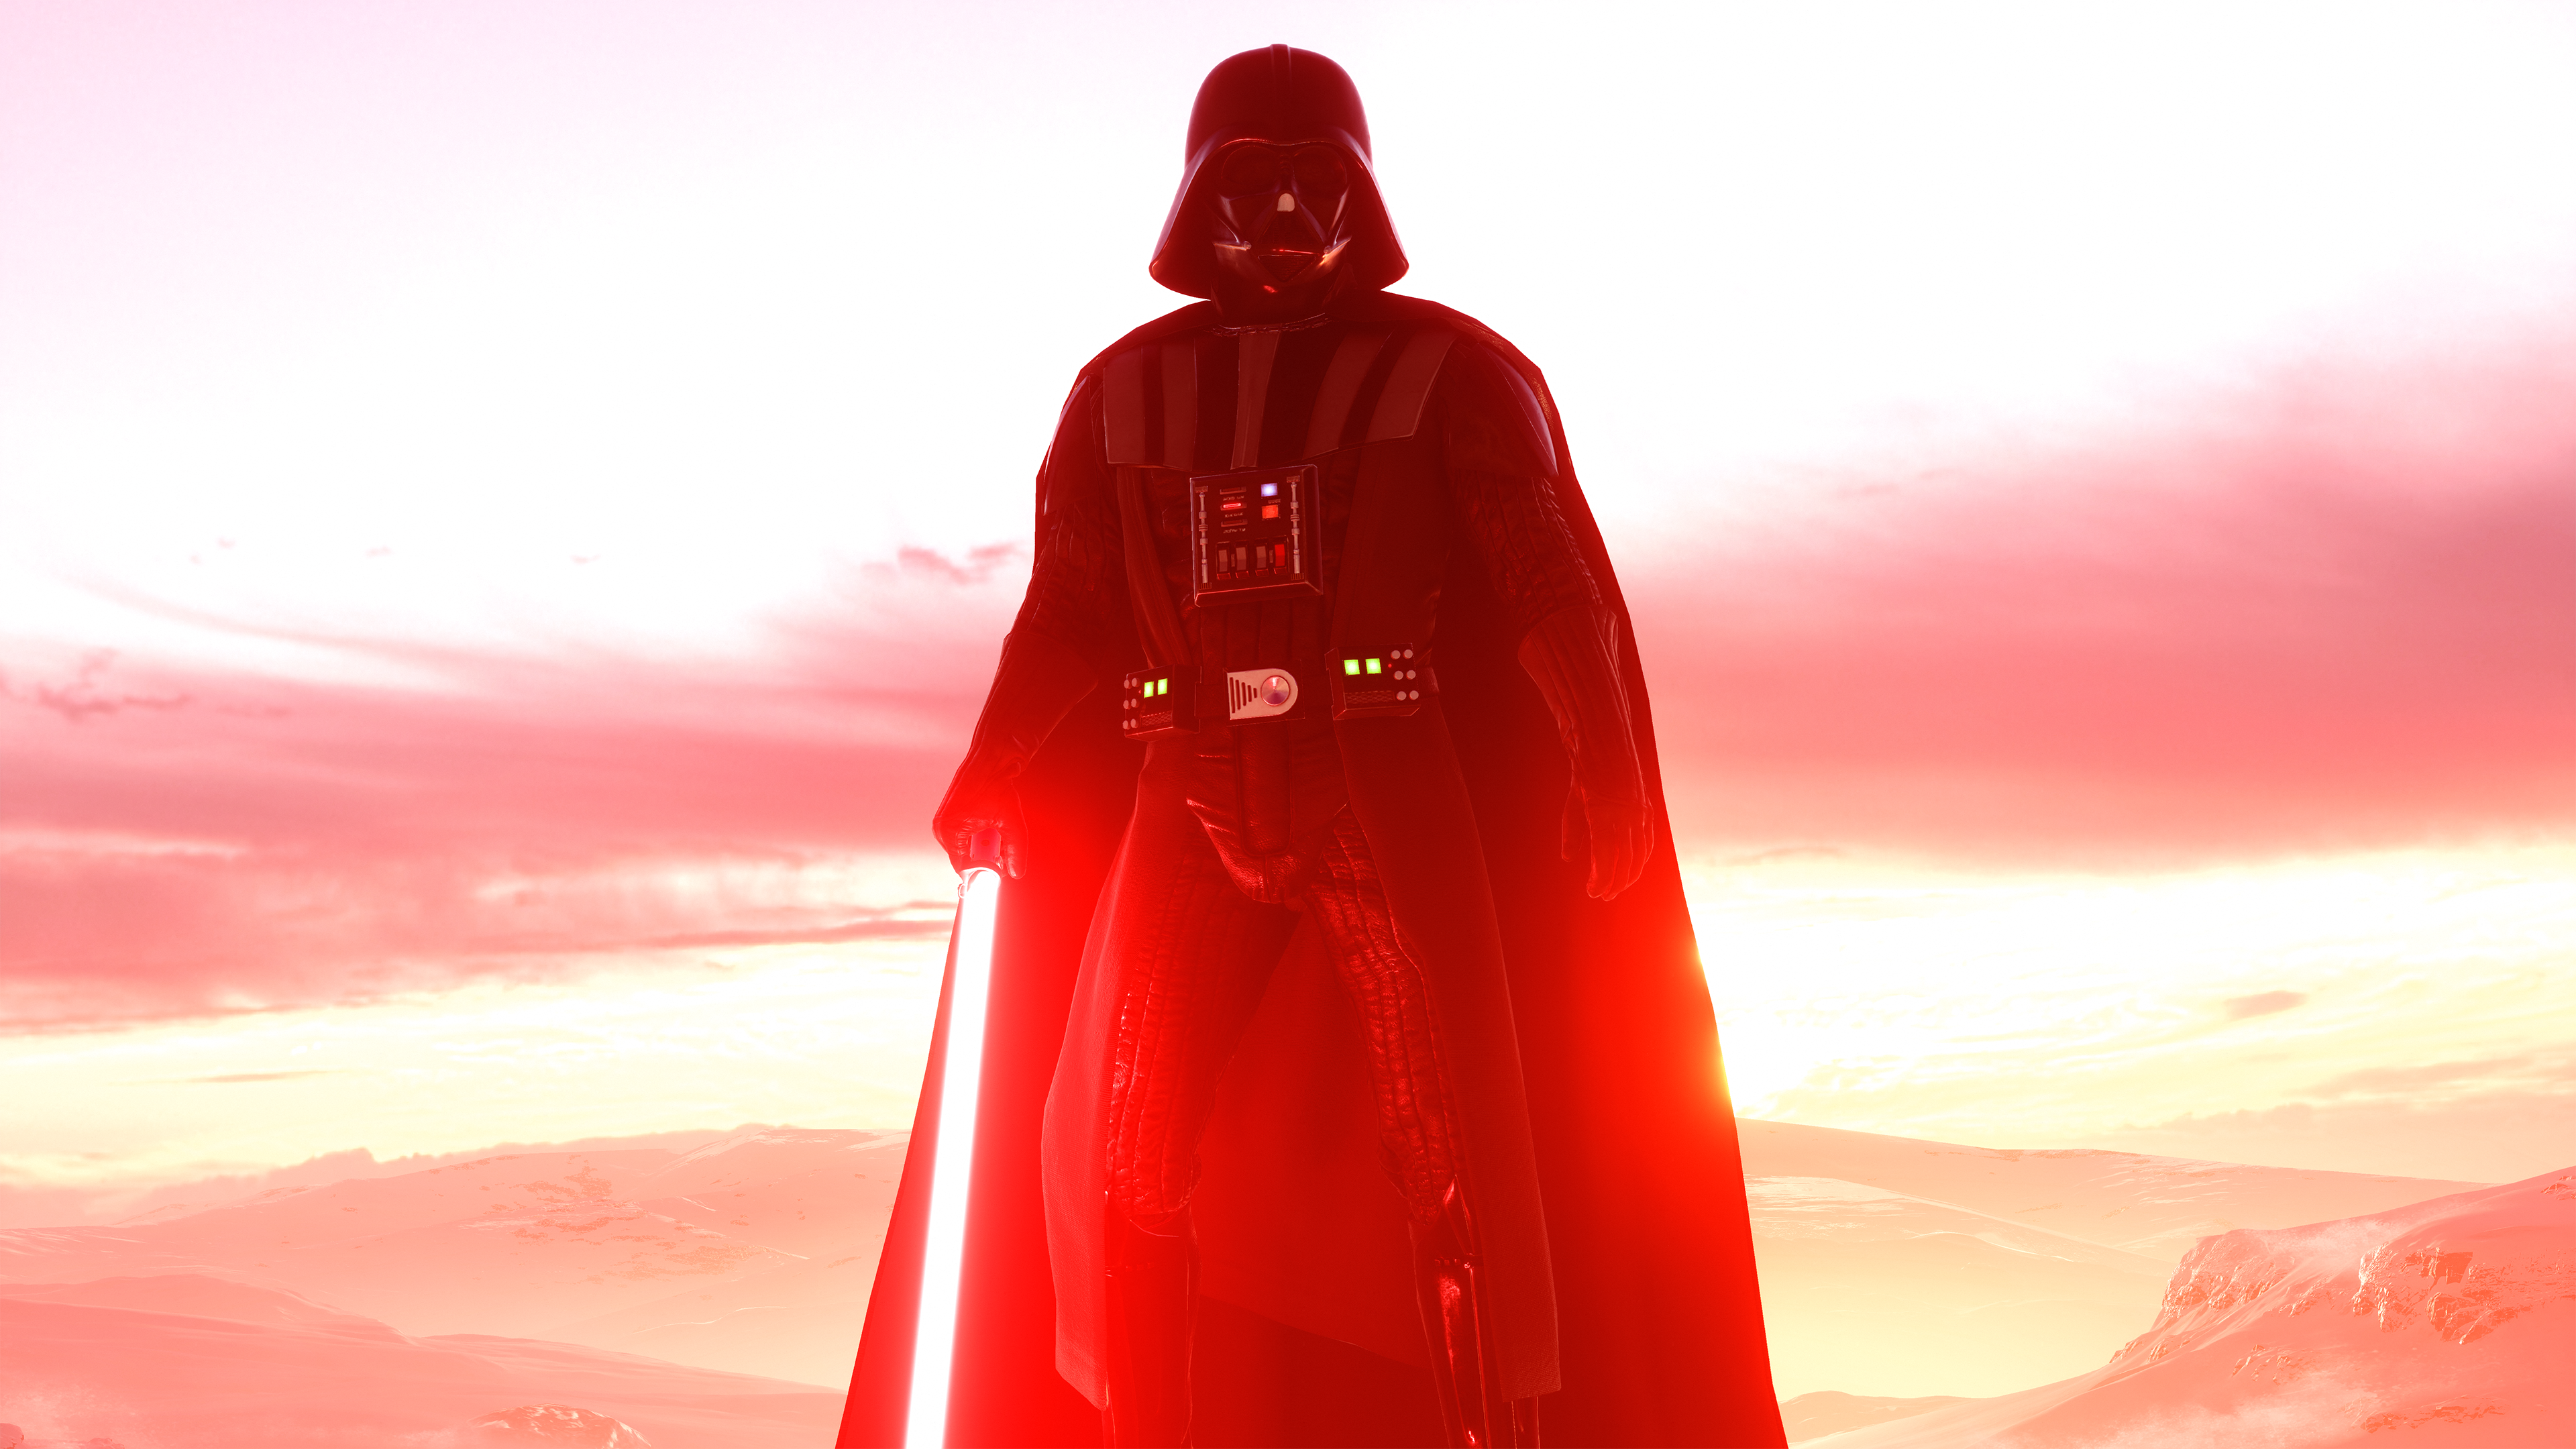 General 3840x2160 Star Wars Star Wars: Battlefront video games Darth Vader lightsaber PC gaming Sith Star Wars Villains video game art science fiction